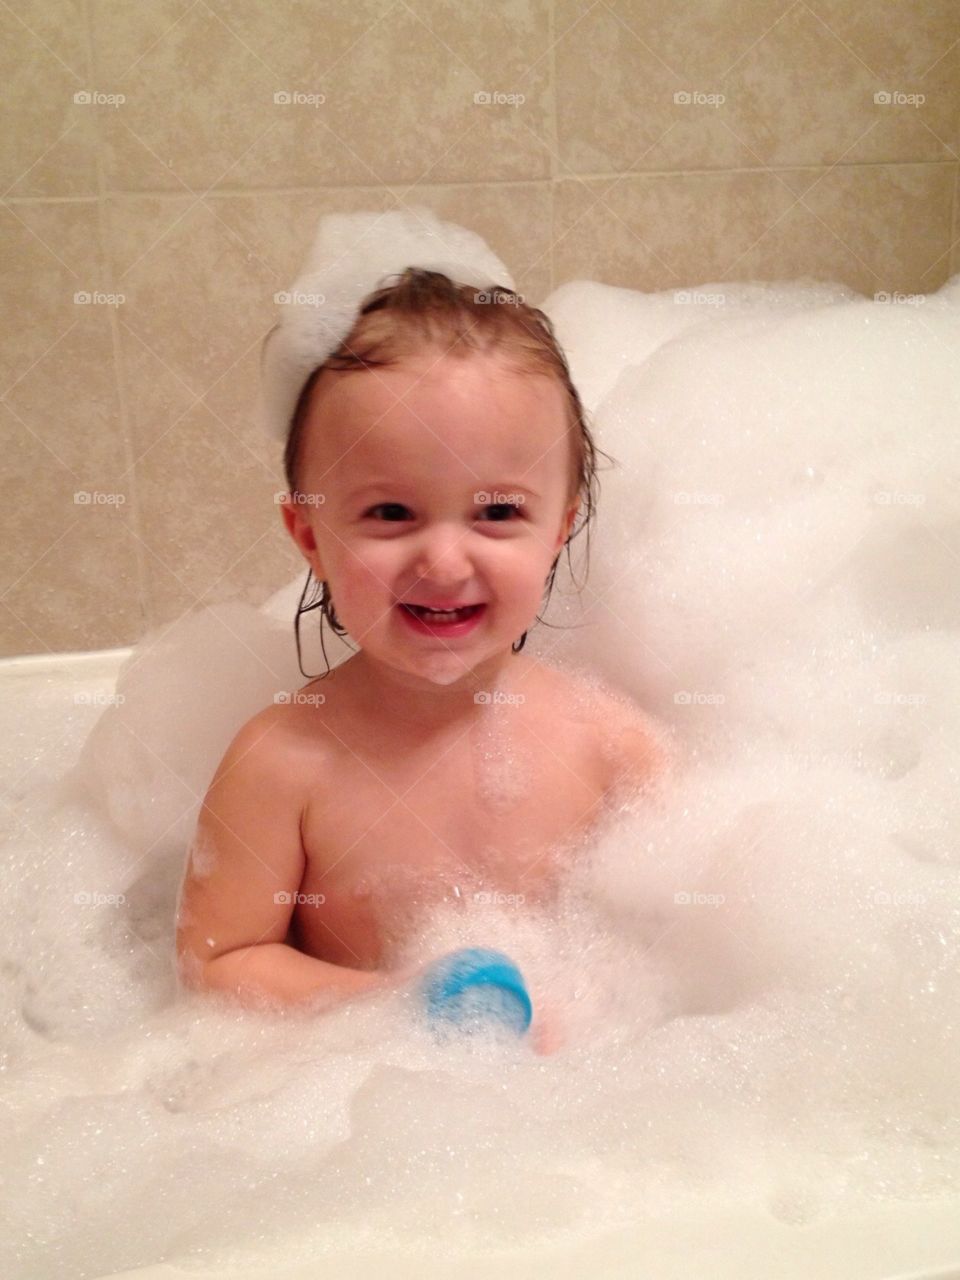 Baby bubble bath. Baby taking a bubble bath